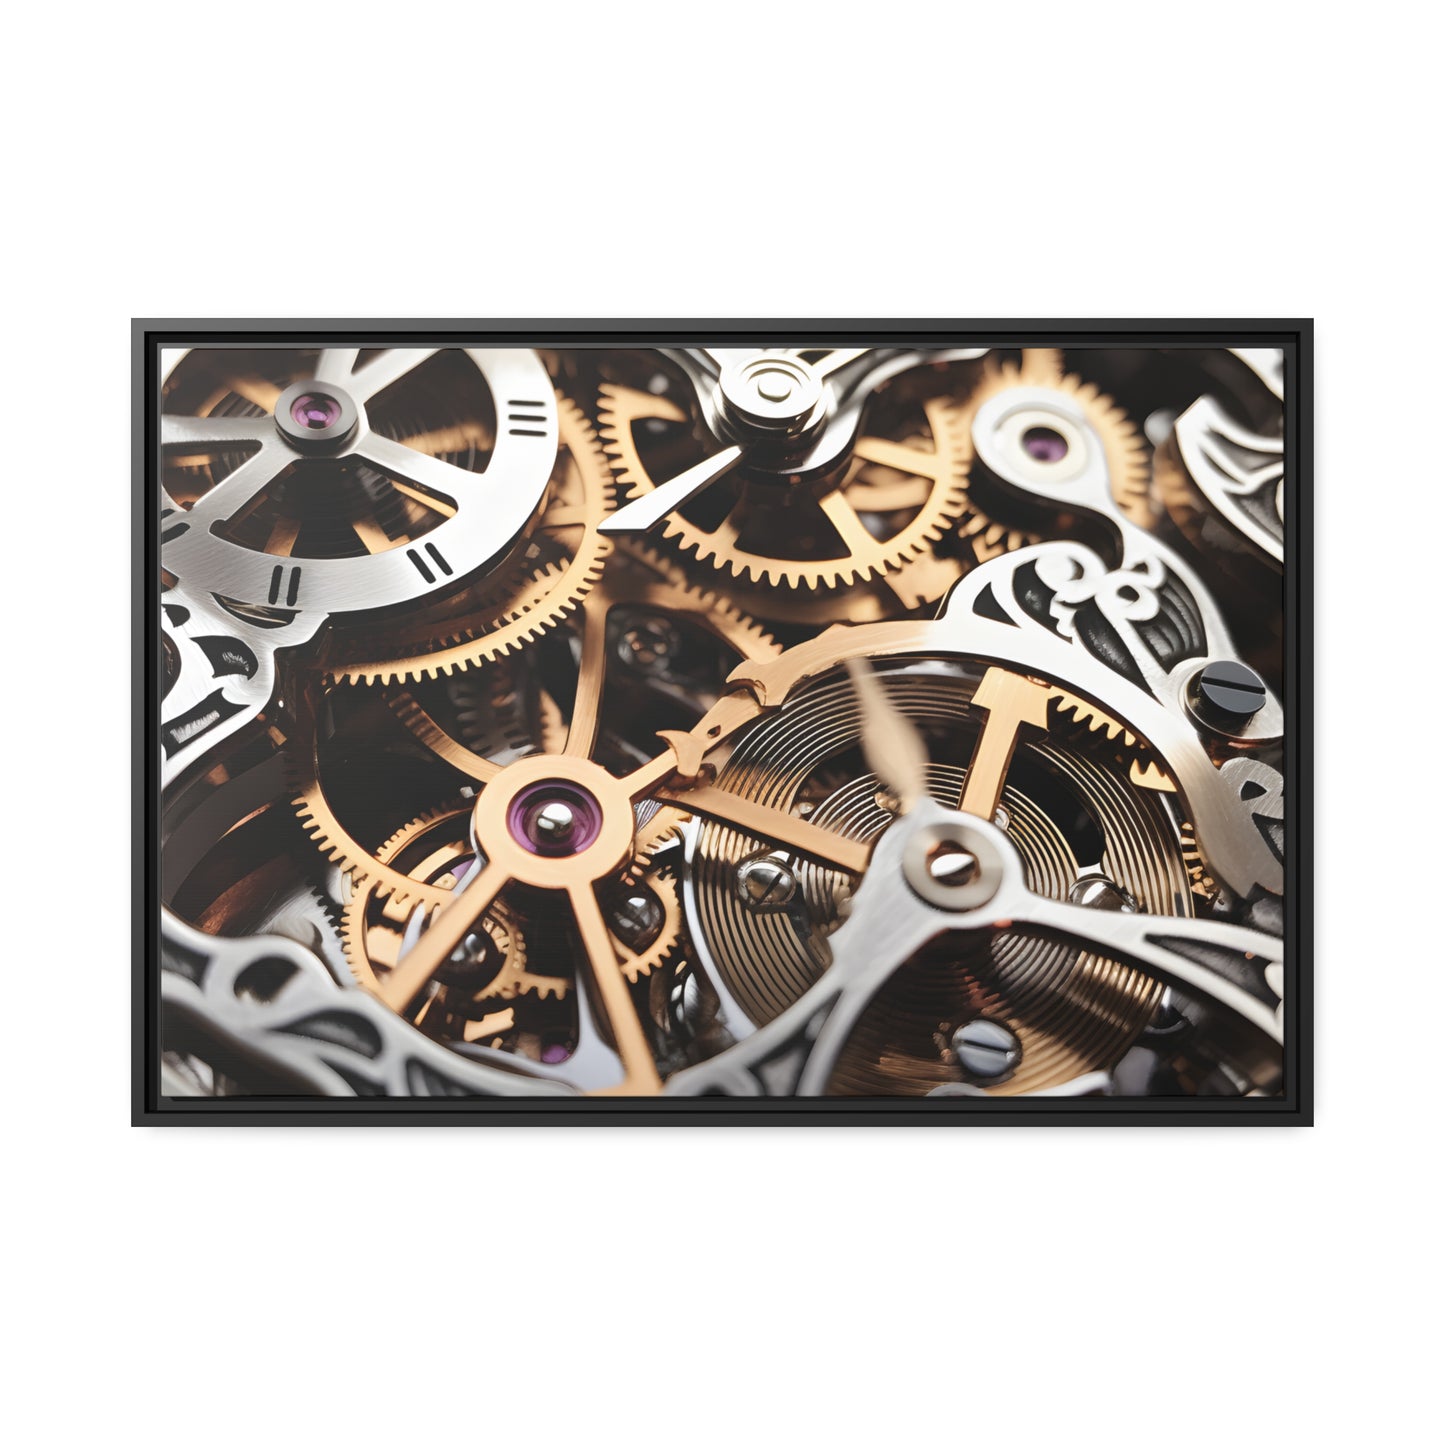 Beautiful Skeletonized Mechanical Watch Framed Canvas Art 30" x 20" (Horizontal Orientation)